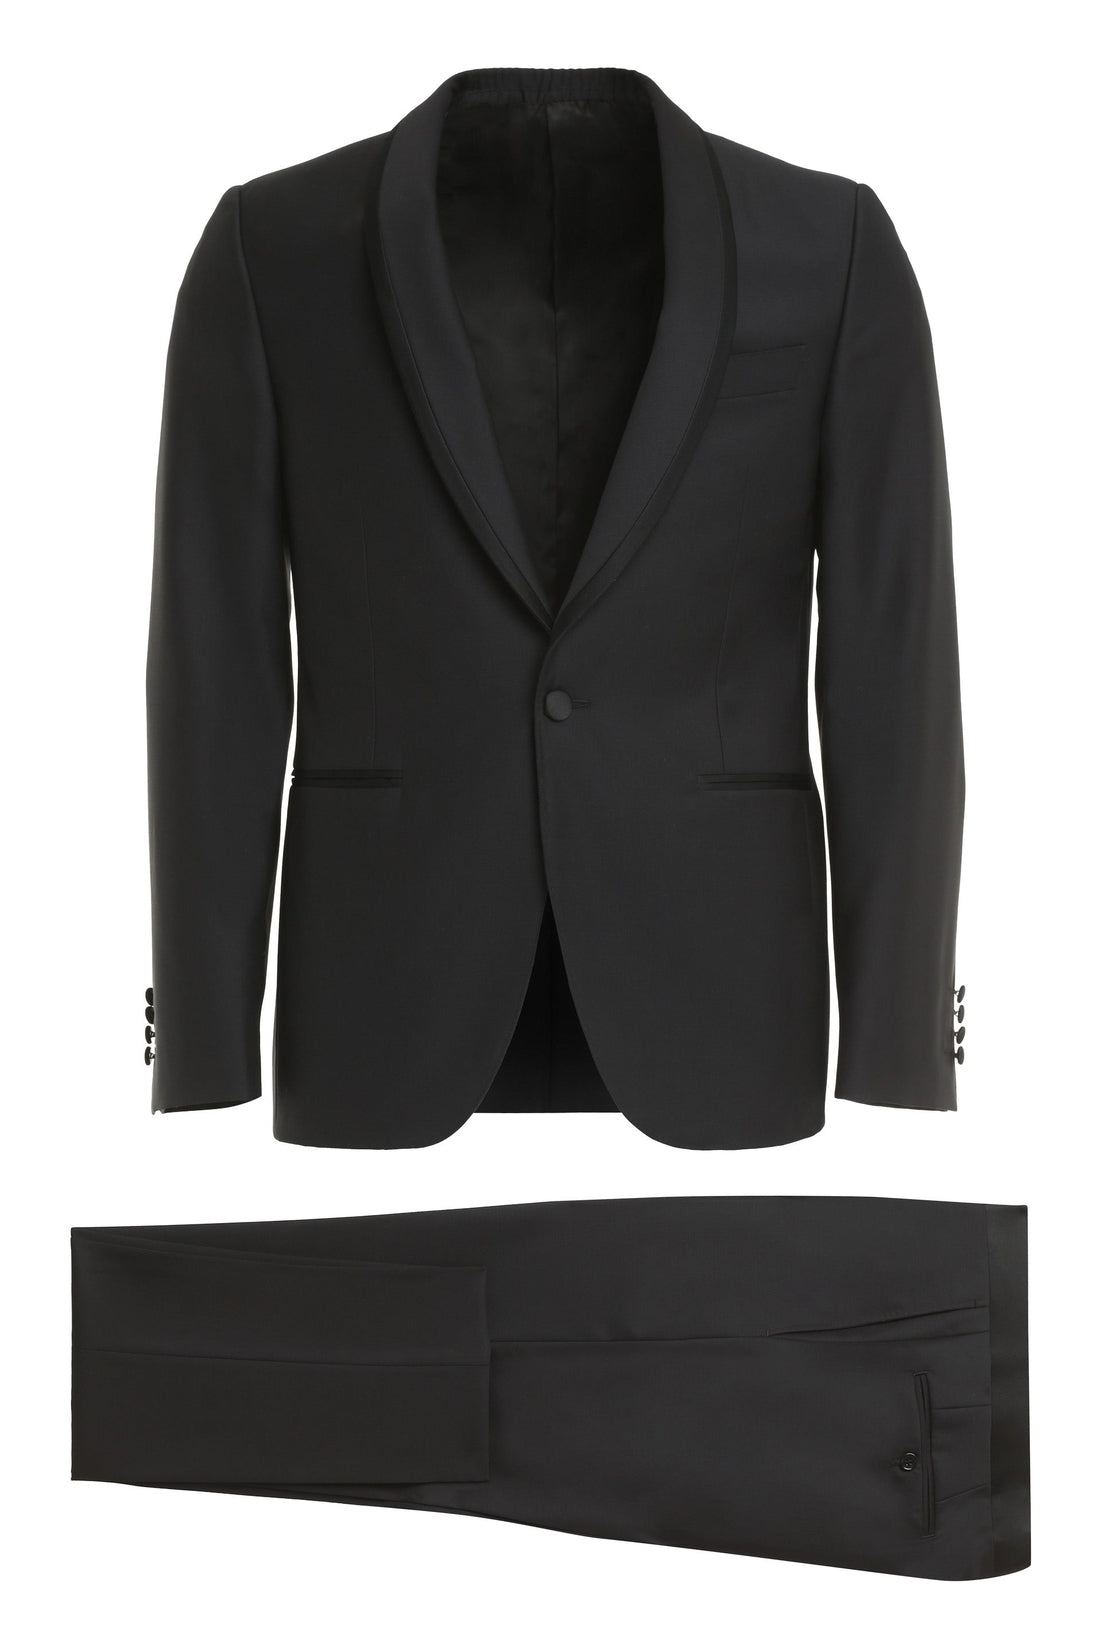 Canali-OUTLET-SALE-Two-piece wool suit-ARCHIVIST